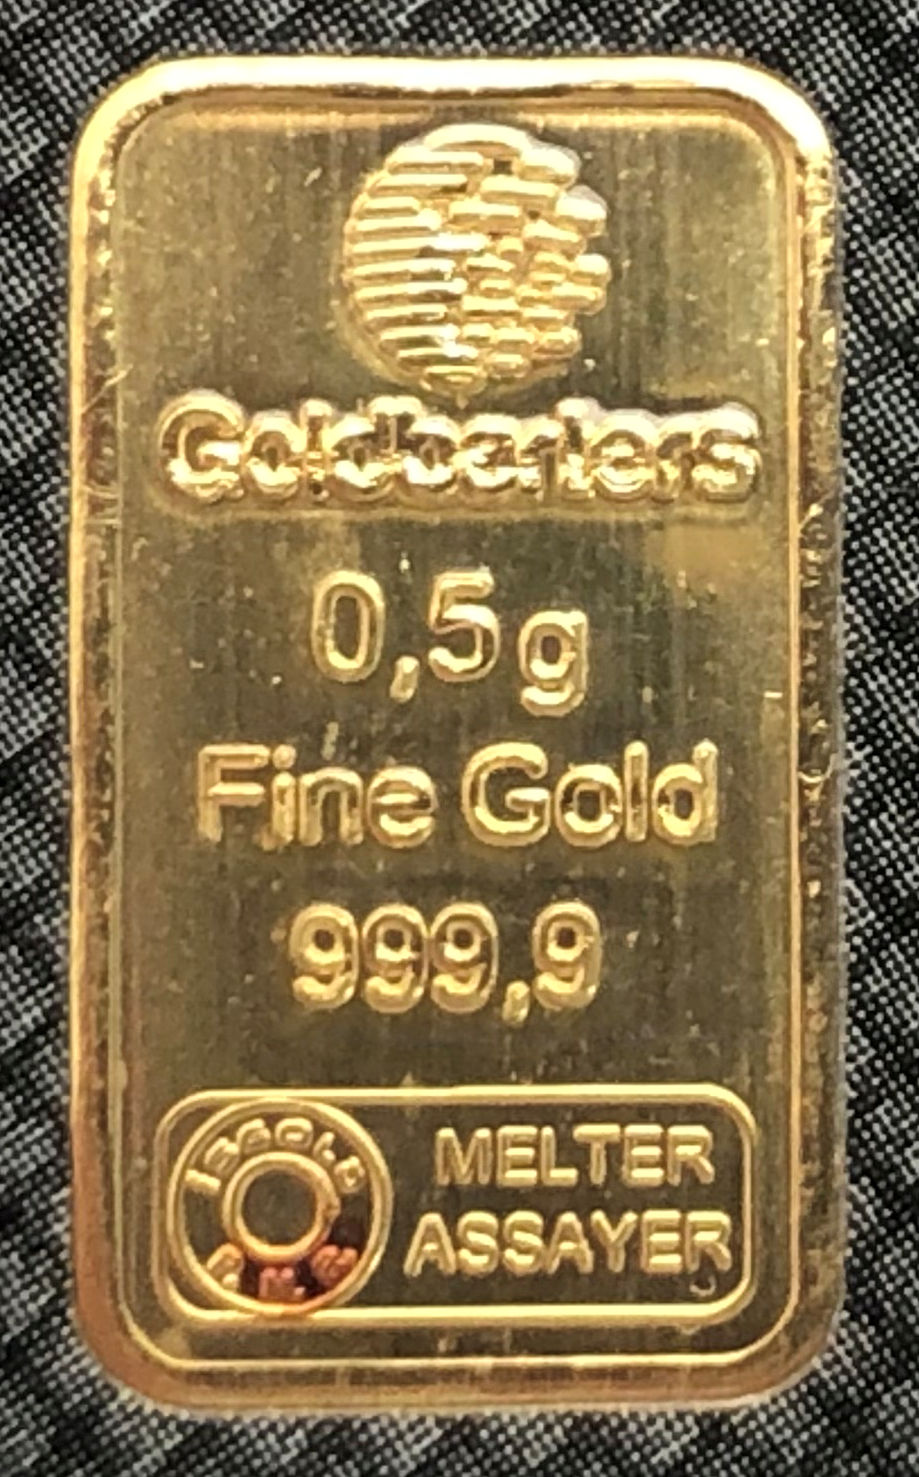 0,5g Goldbarters